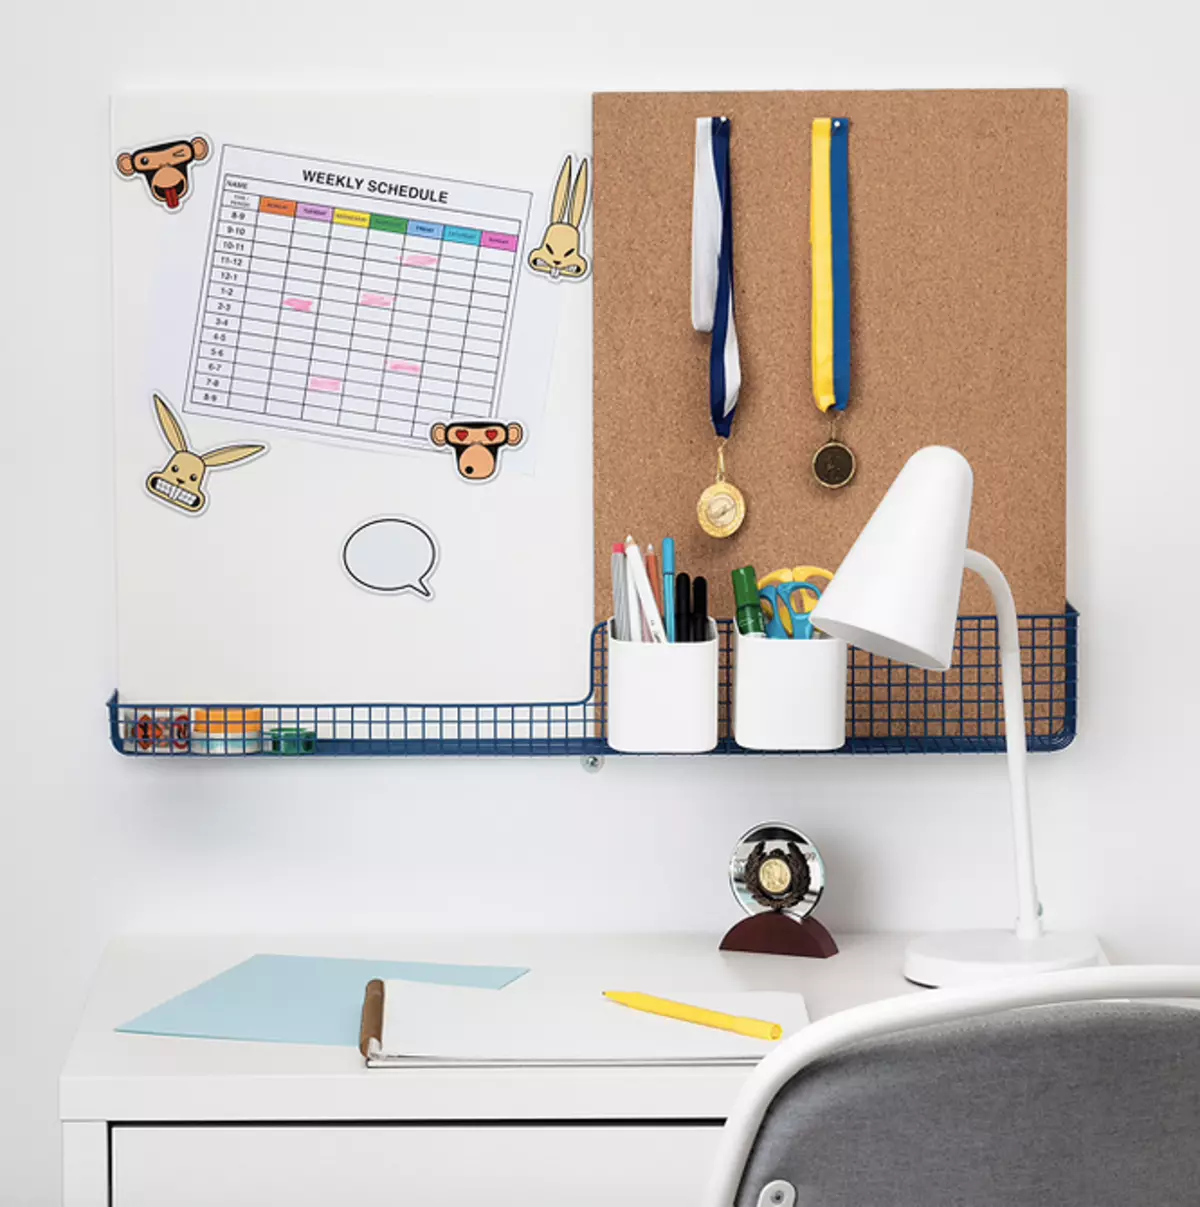 IKEA για μαθητές: 8 αντικείμενα που θα βοηθήσουν στον εξοπλισμό του χώρου εργασίας 7366_37